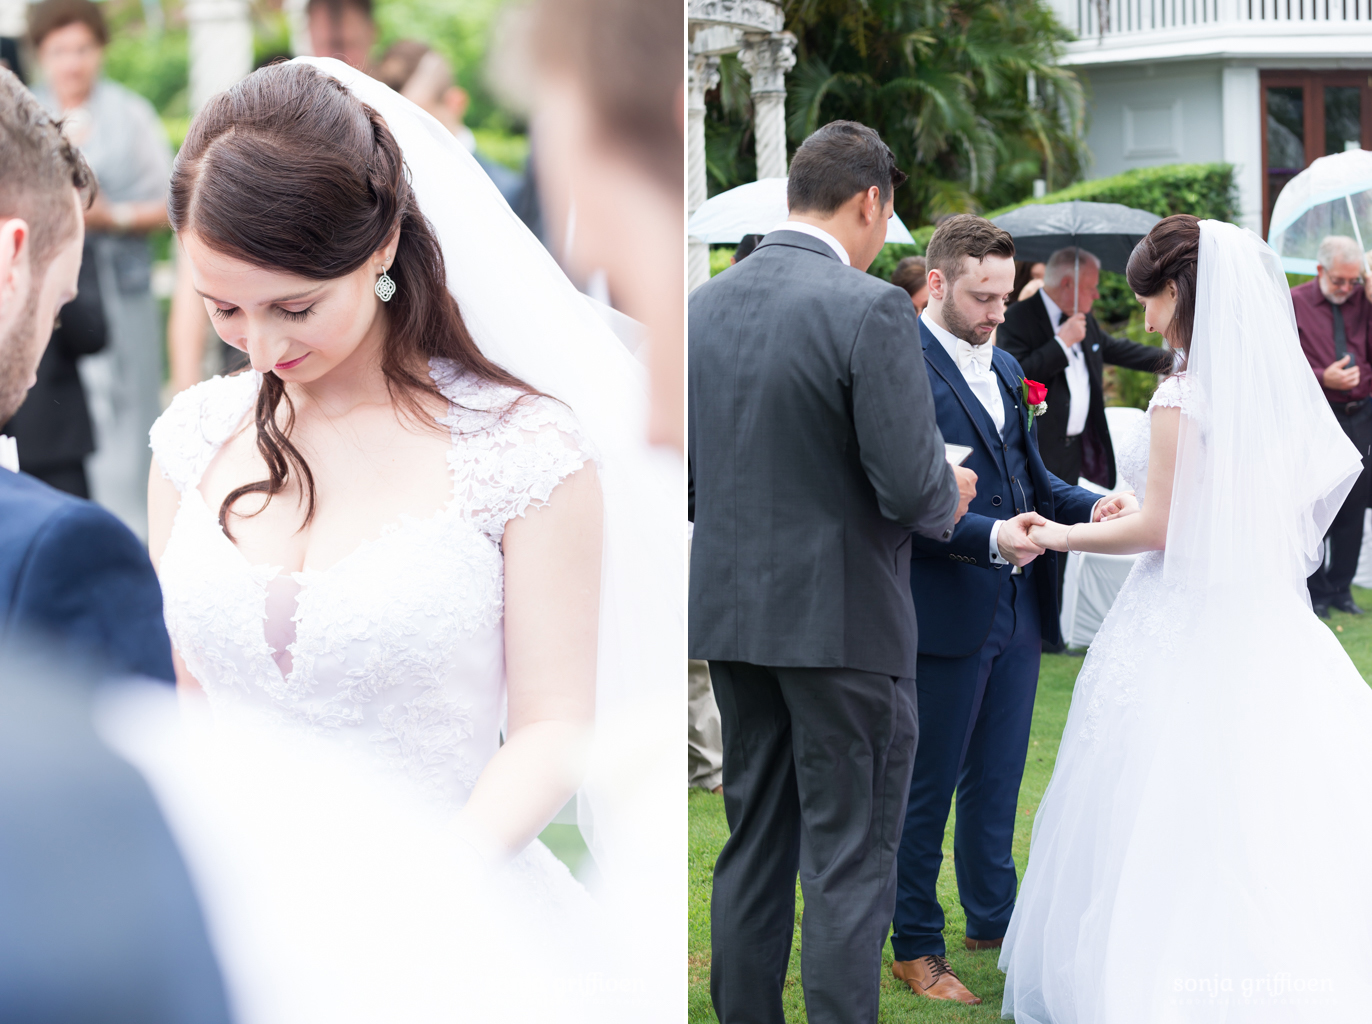 Walther-Wedding-Ceremony-Brisbane-Wedding-Photographer-Sonja-Griffioen-11-copy.jpg